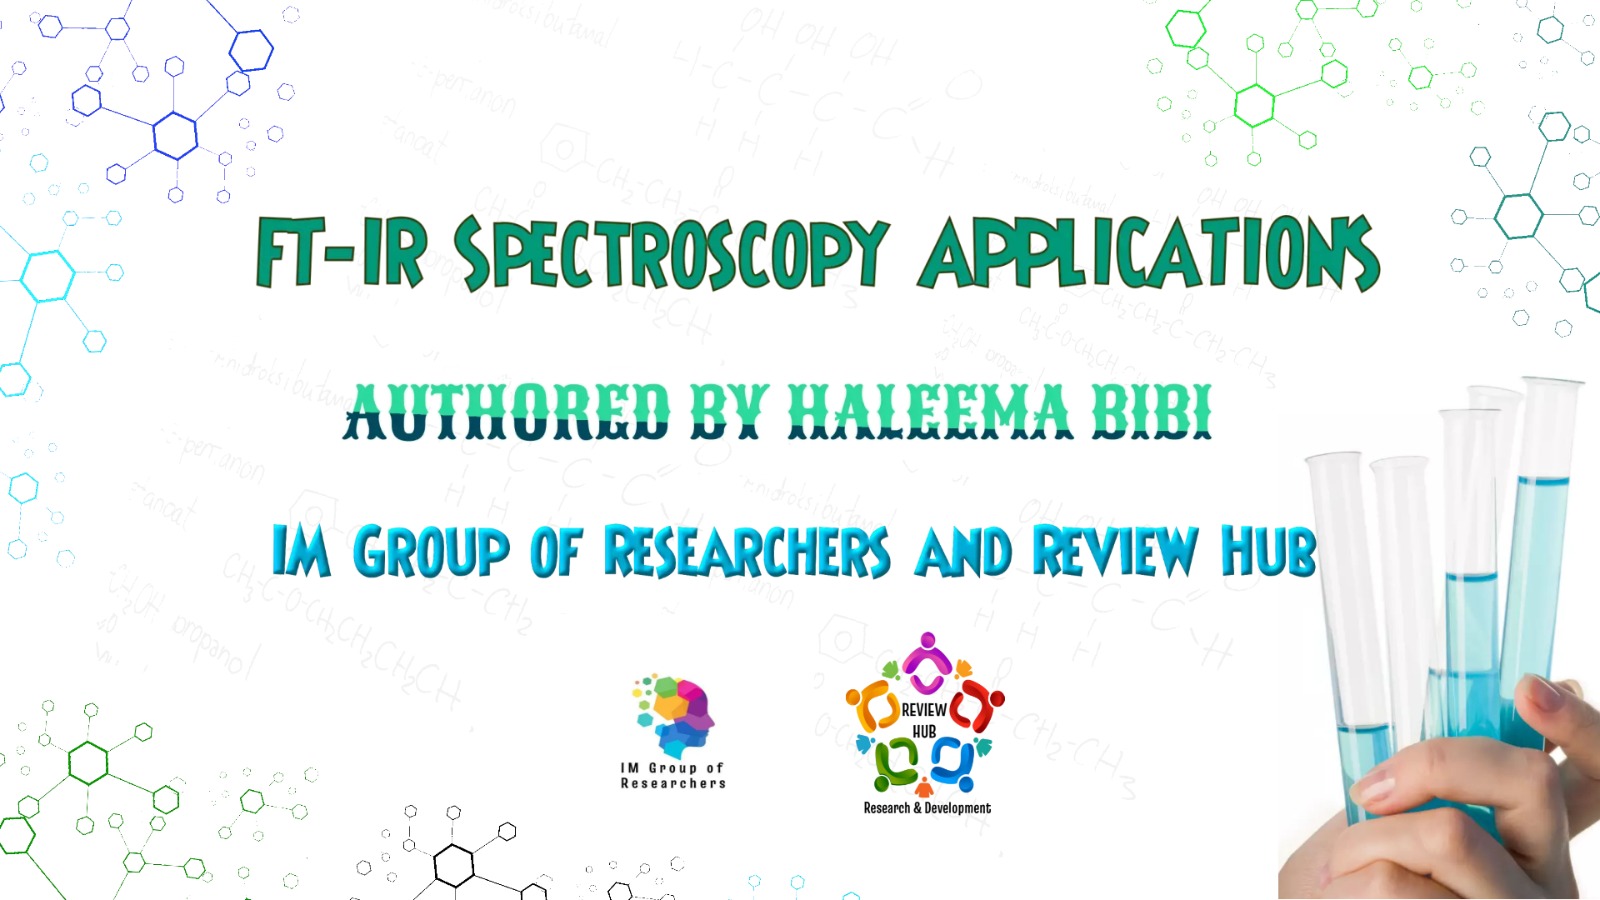 Applications of FT-IR Spectrscopy